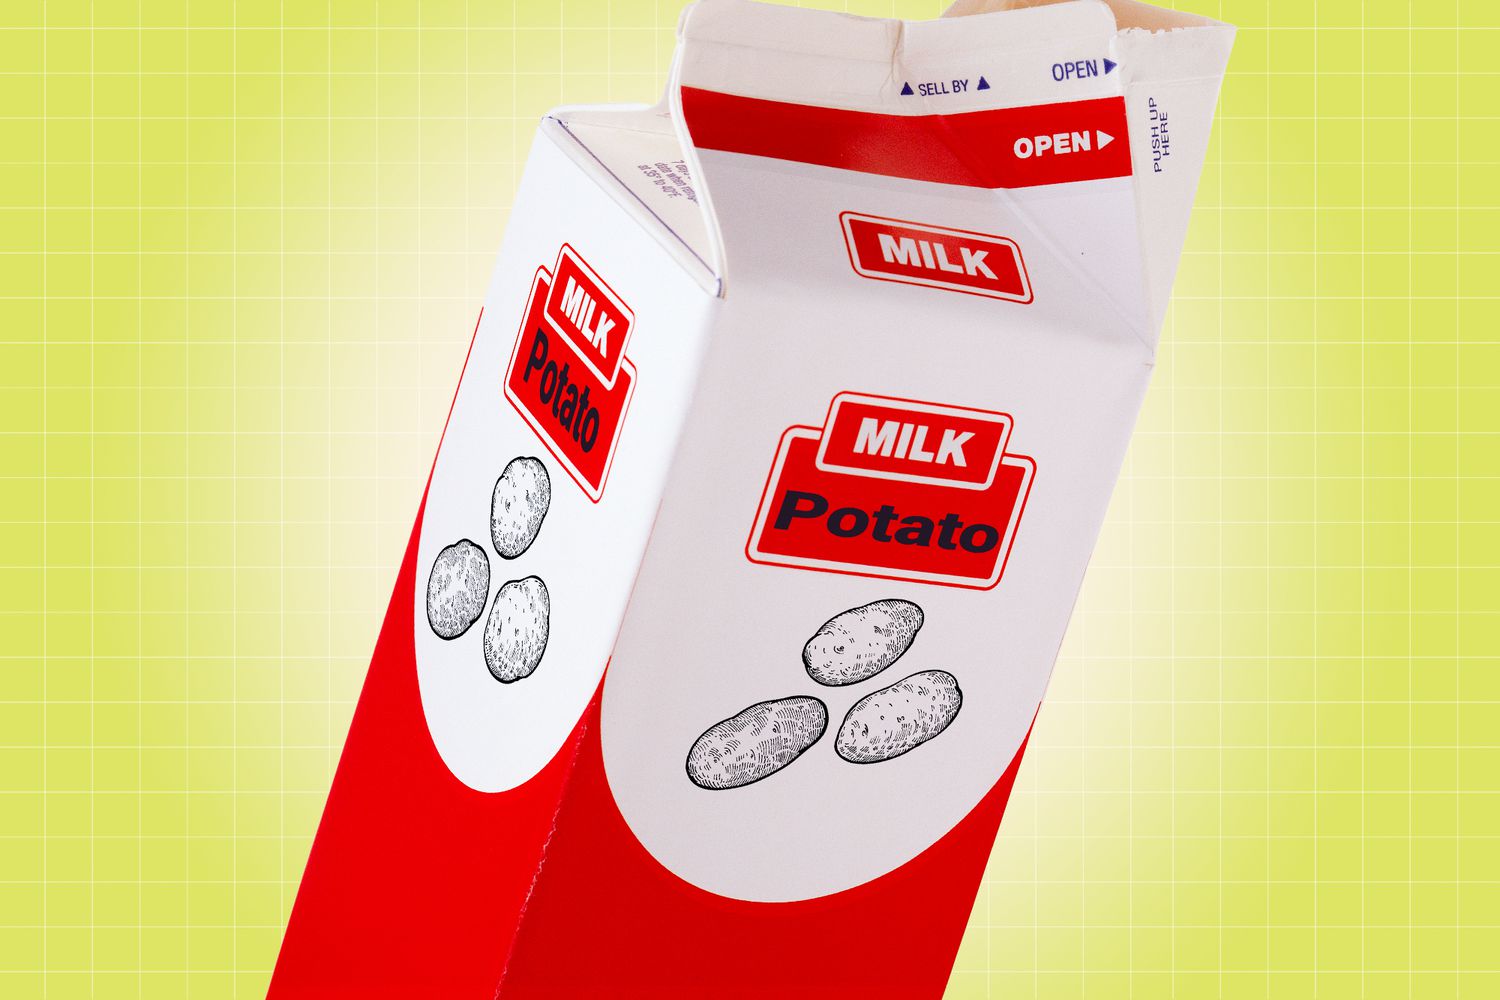 a carton of potato milk on a designed background